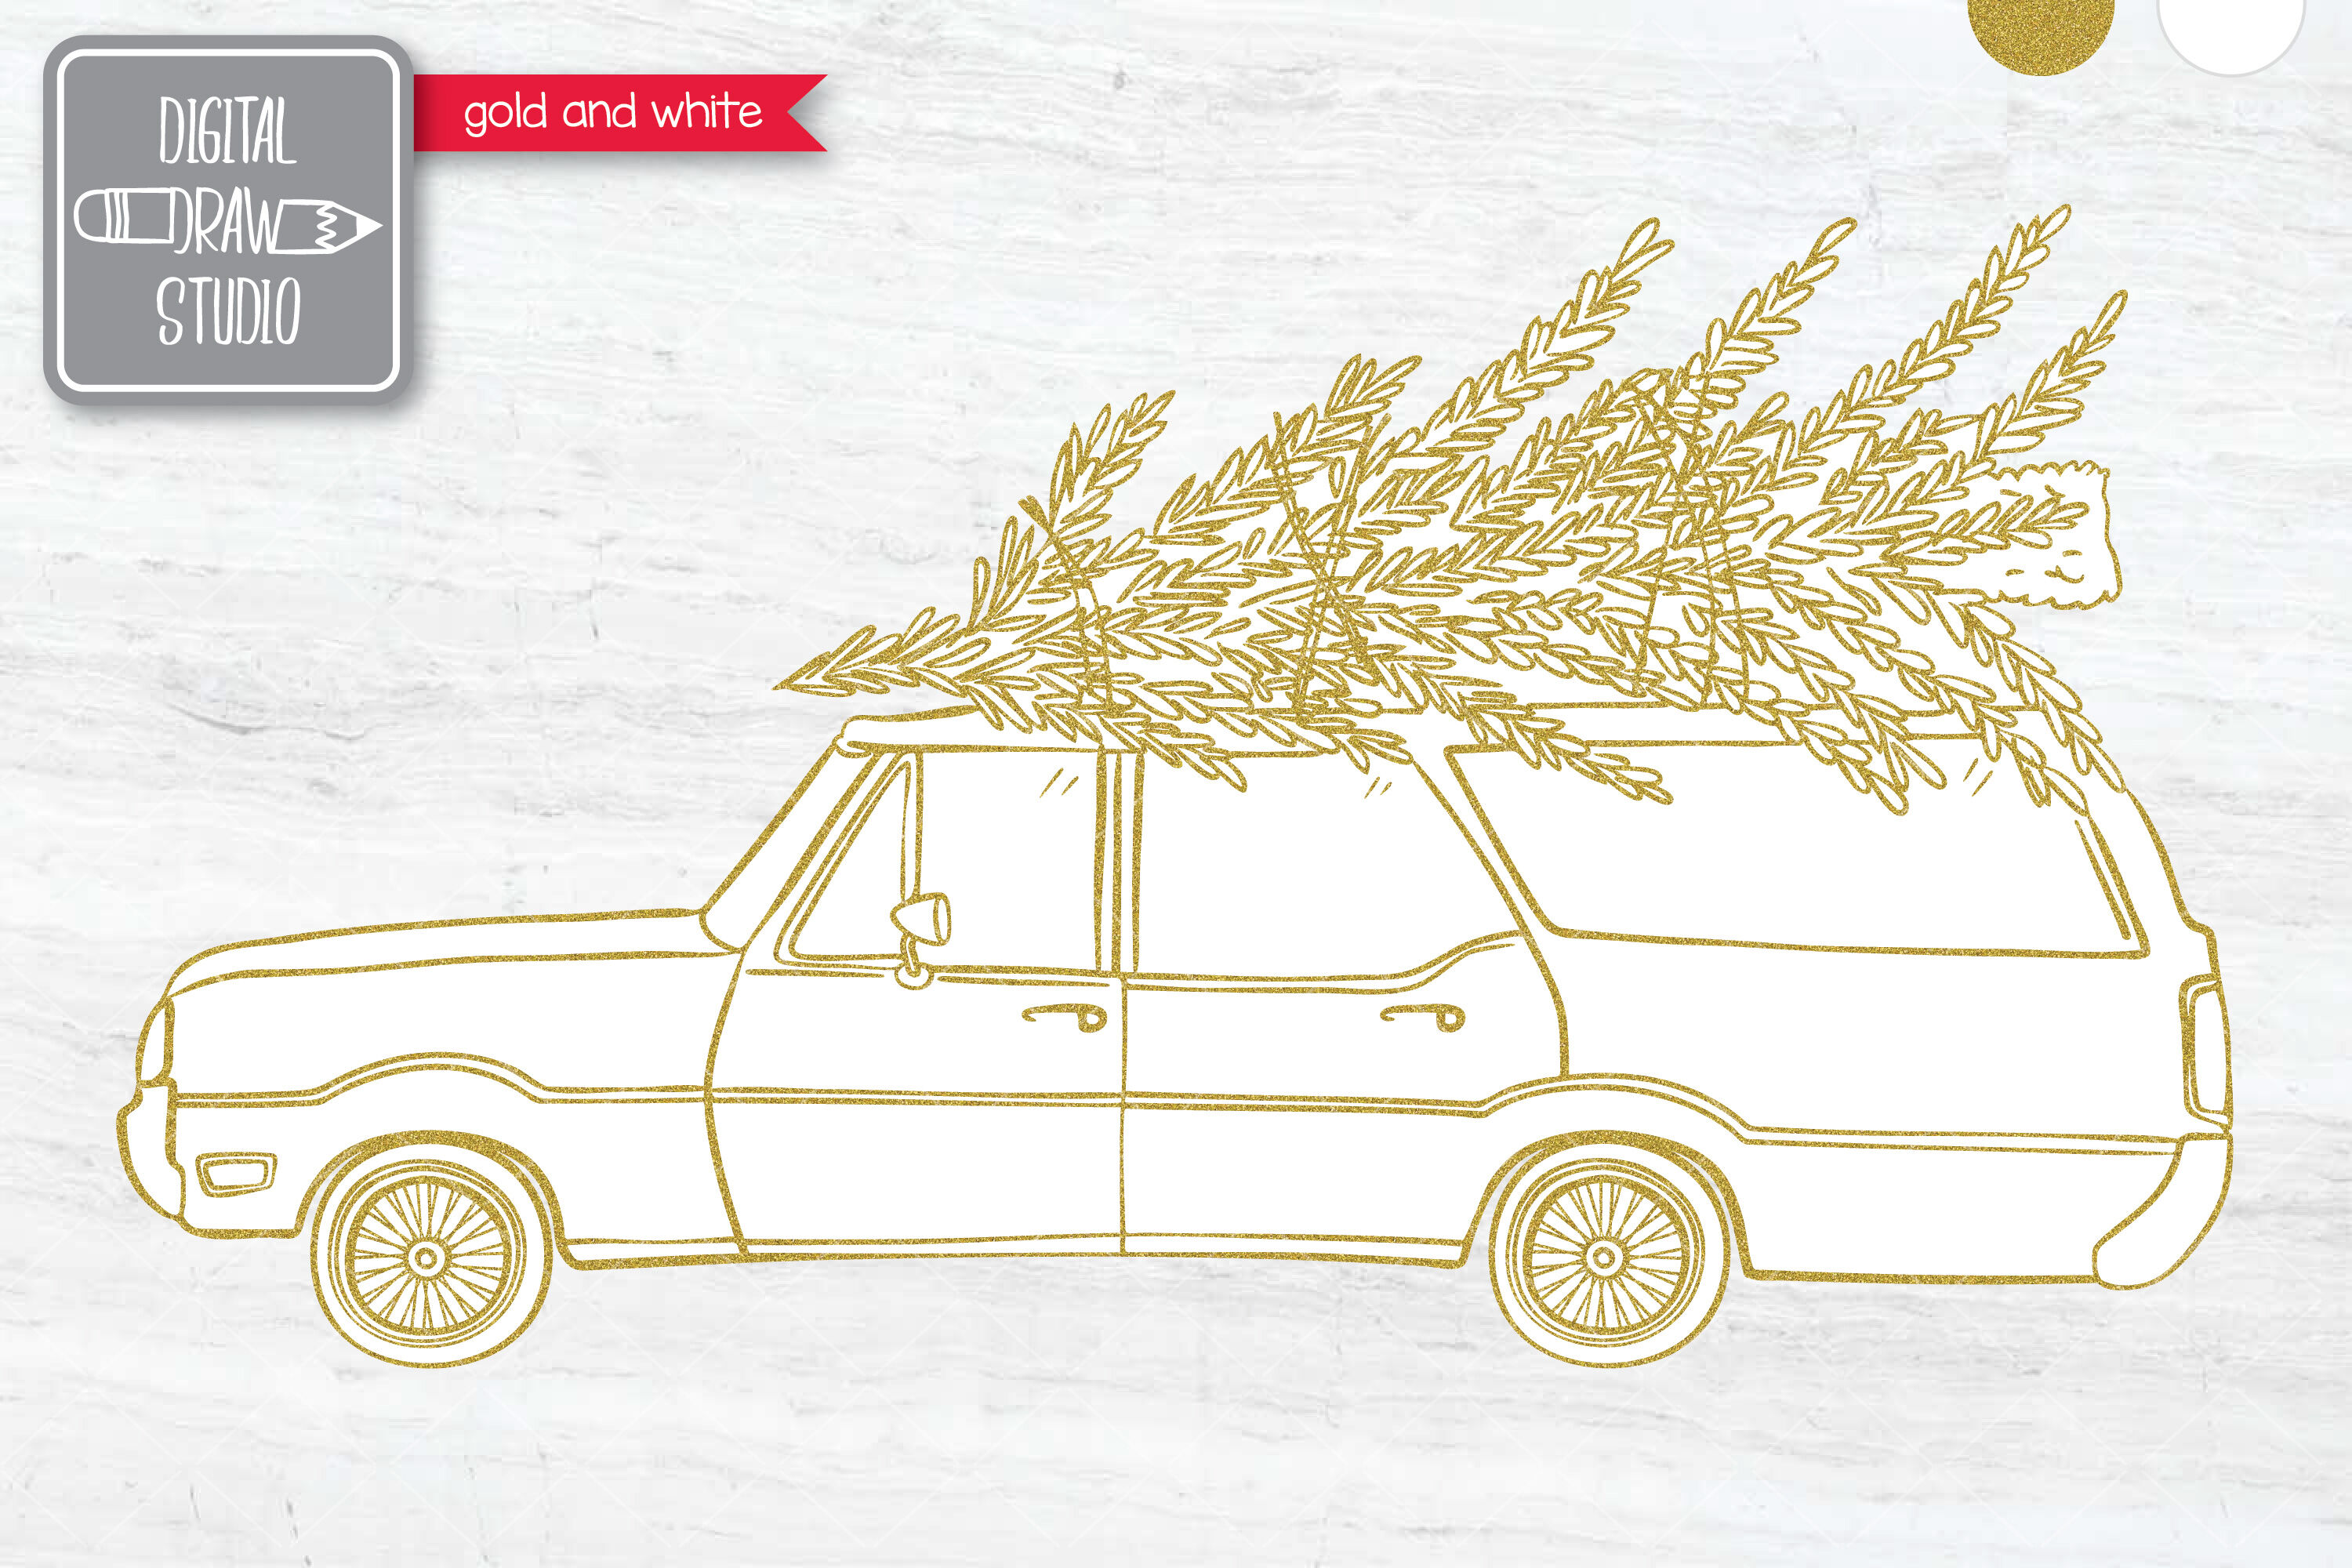 Station Wagon Car With Christmas Tree On Roof Top Holiday By Digital Draw Studio Thehungryjpeg Com